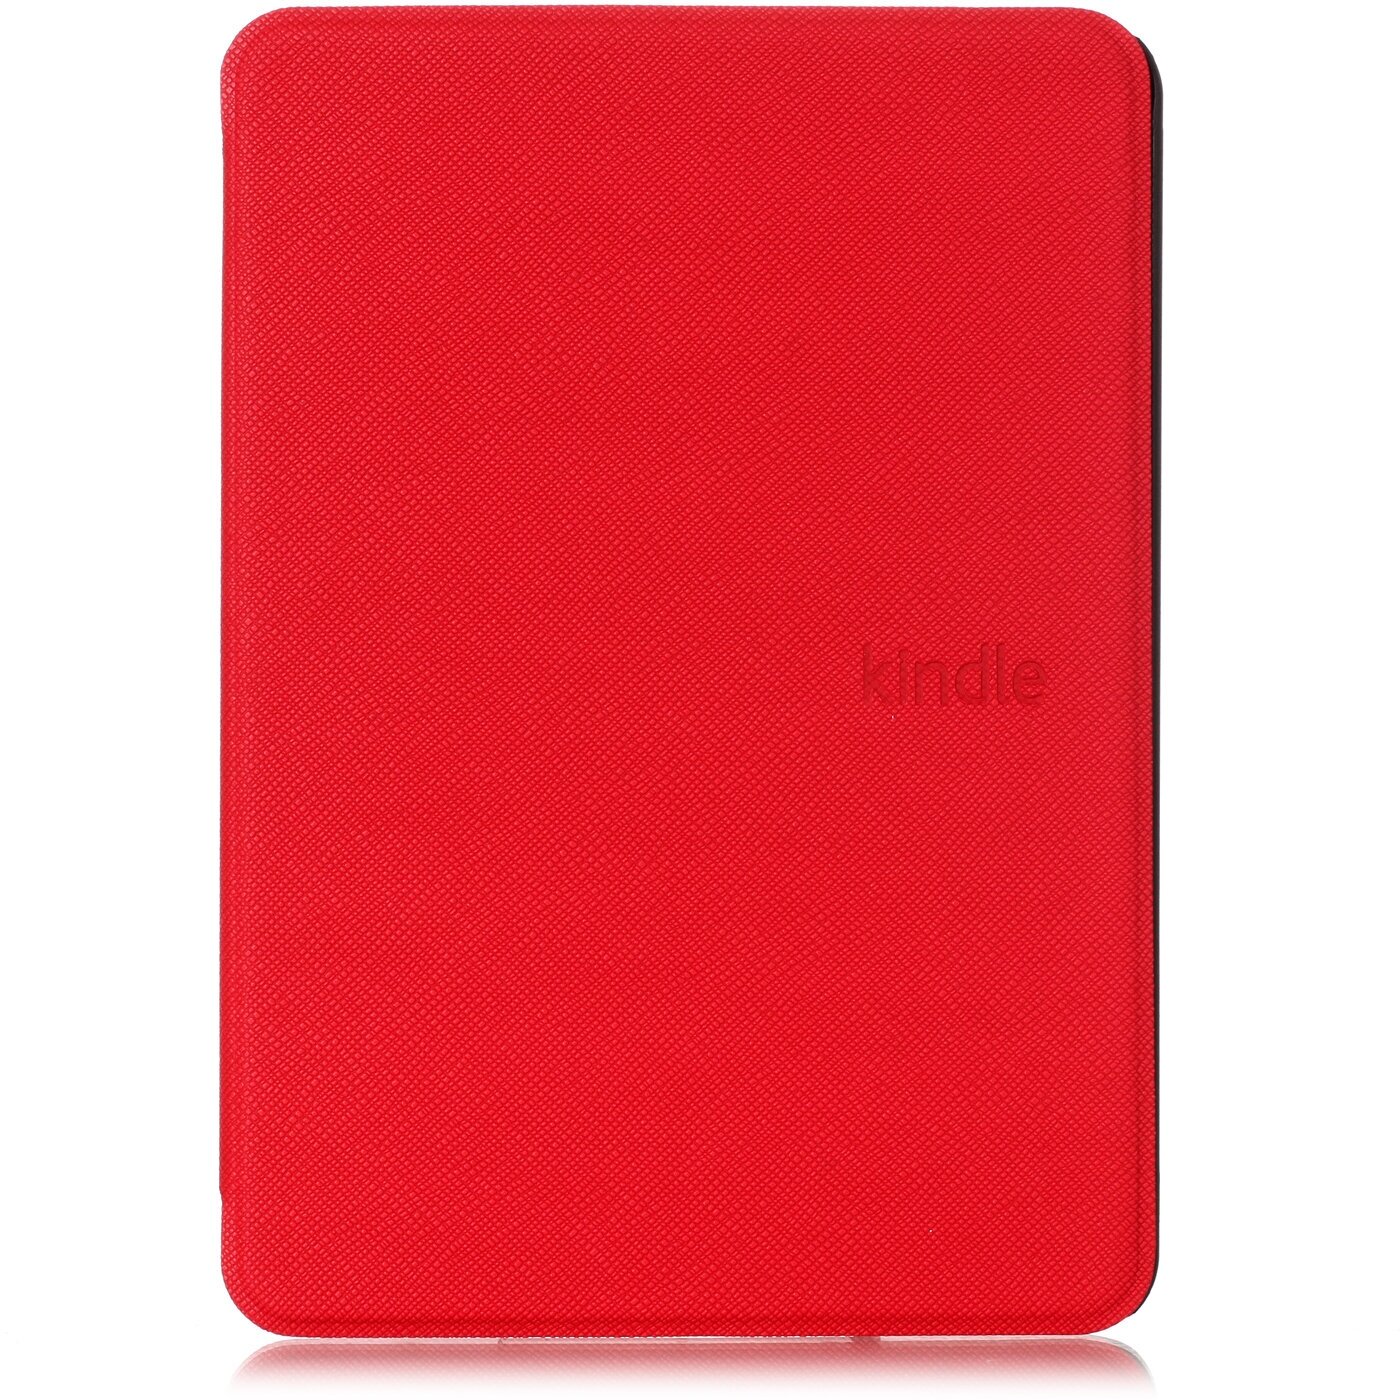 Чехол-обложка для Amazon Kindle PaperWhite 2018 red